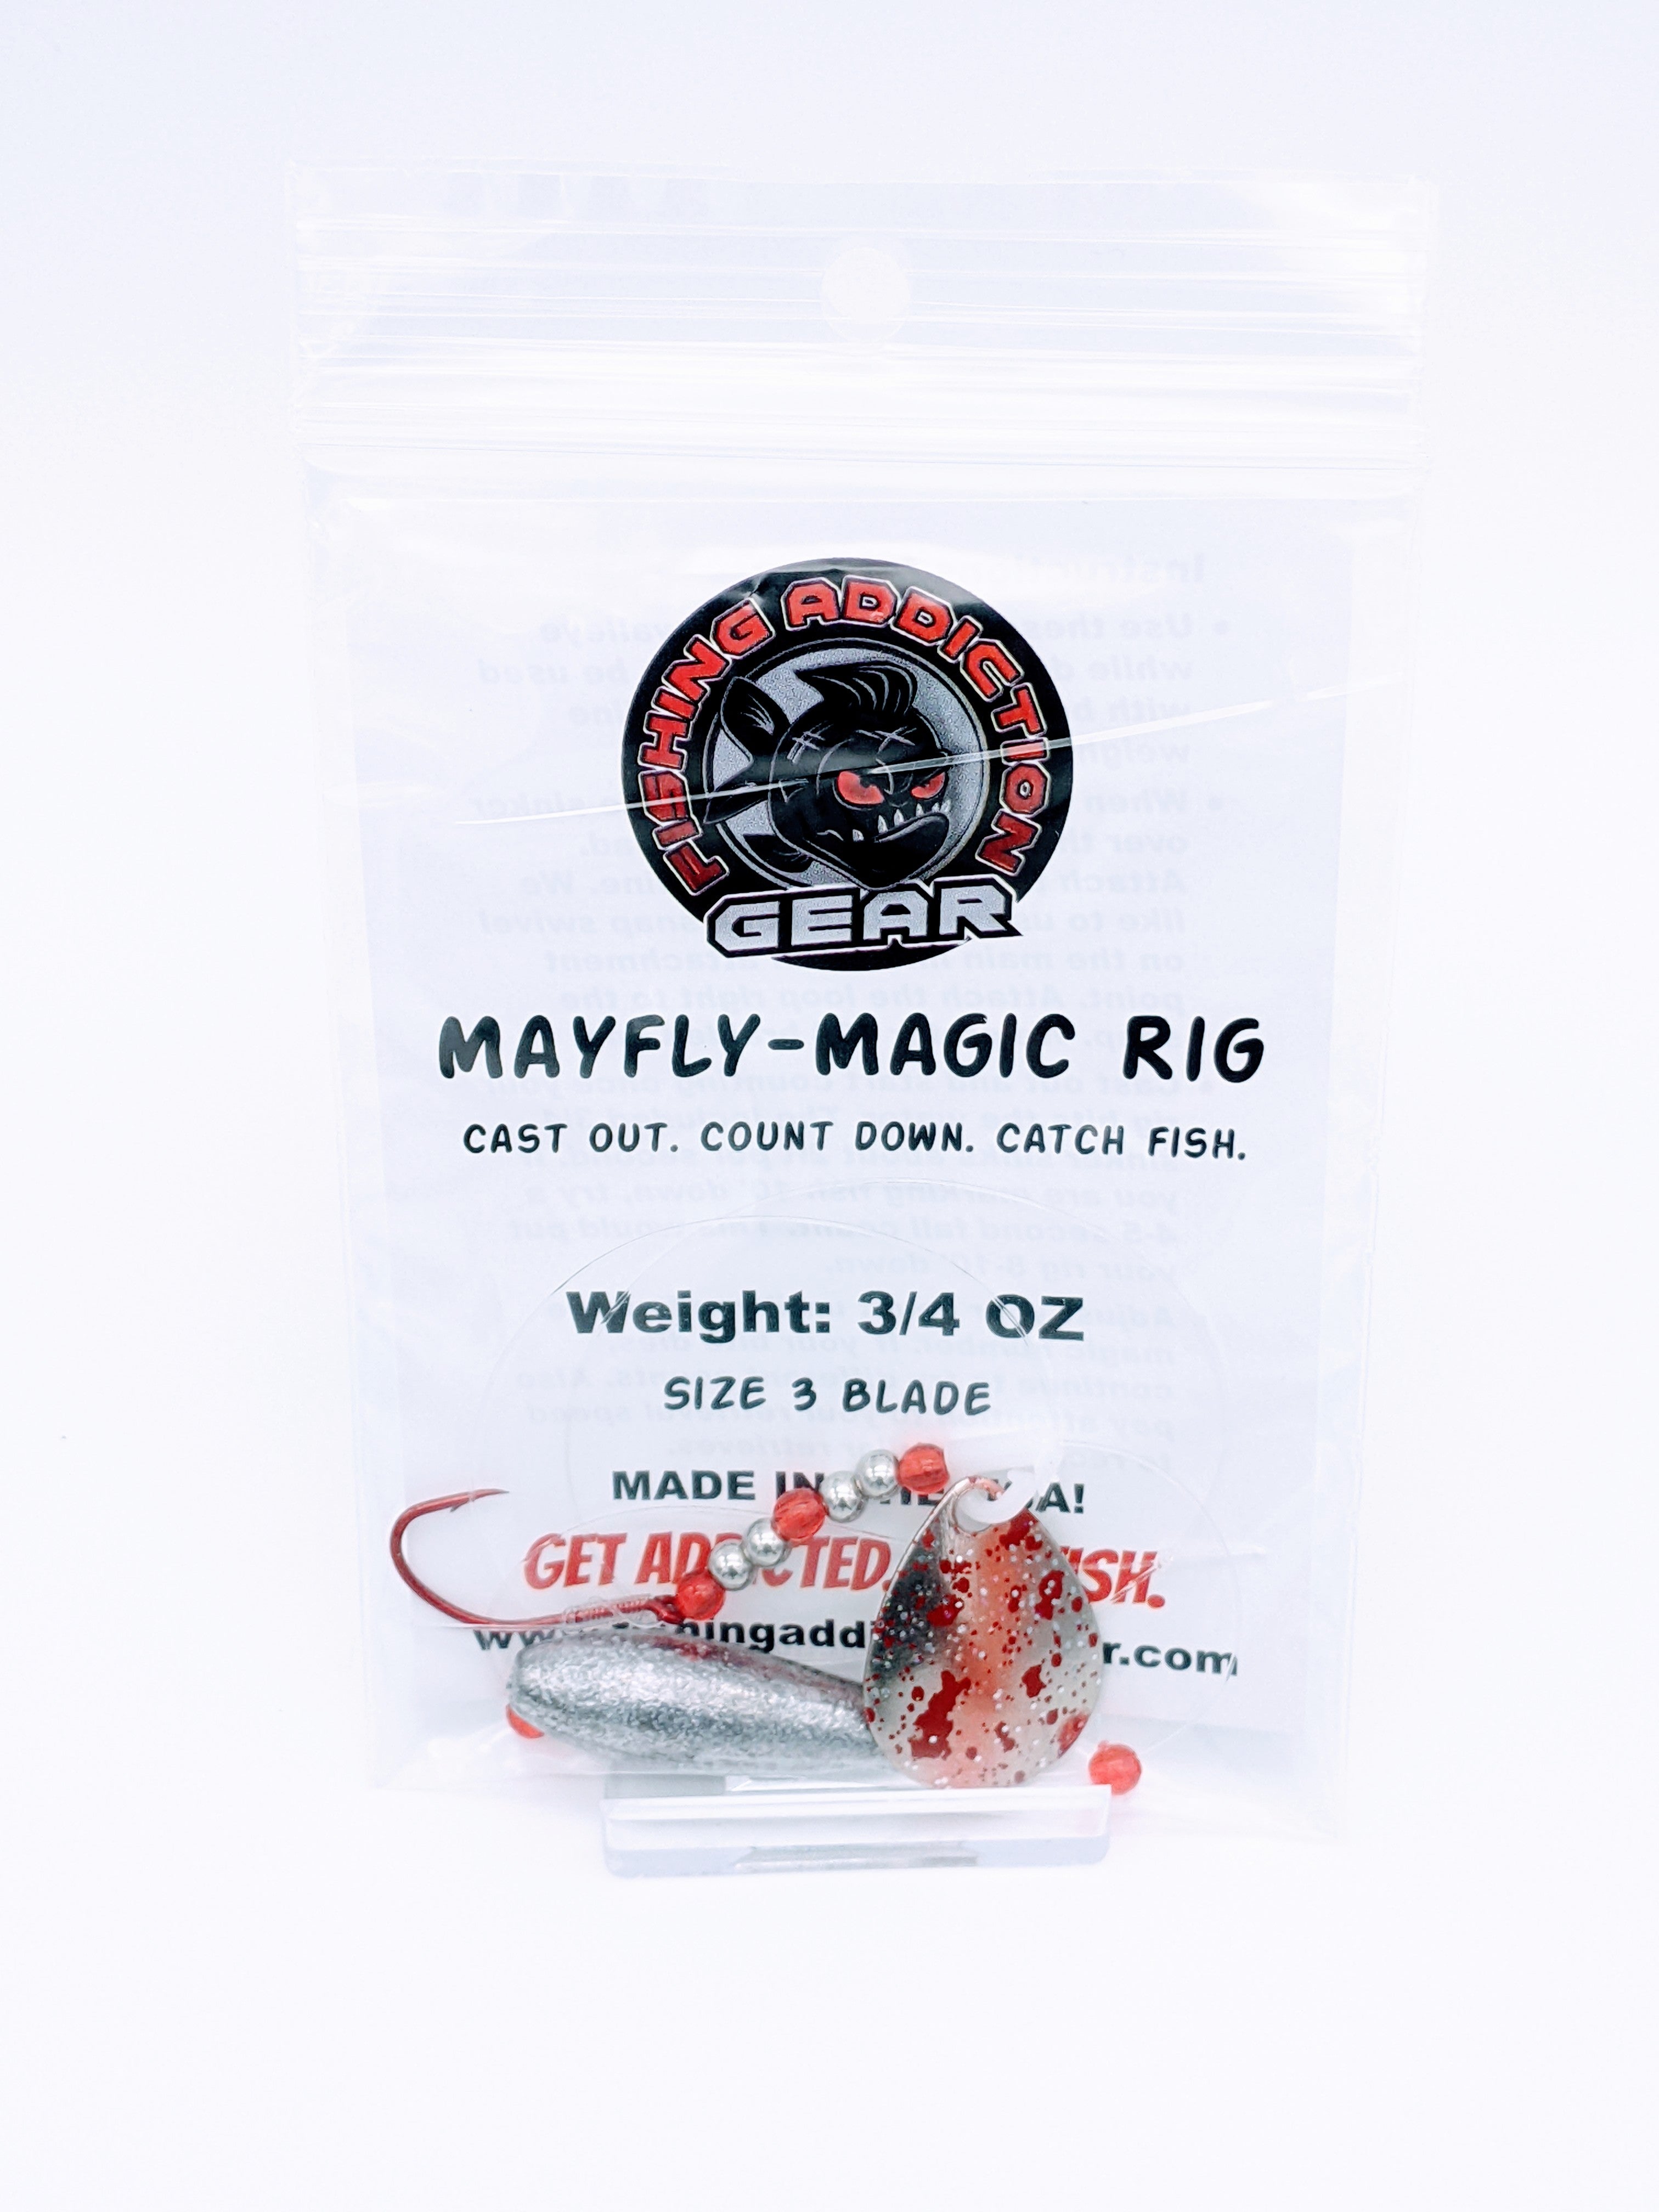 Mayfly Magic Rig – Fishing Addiction Gear